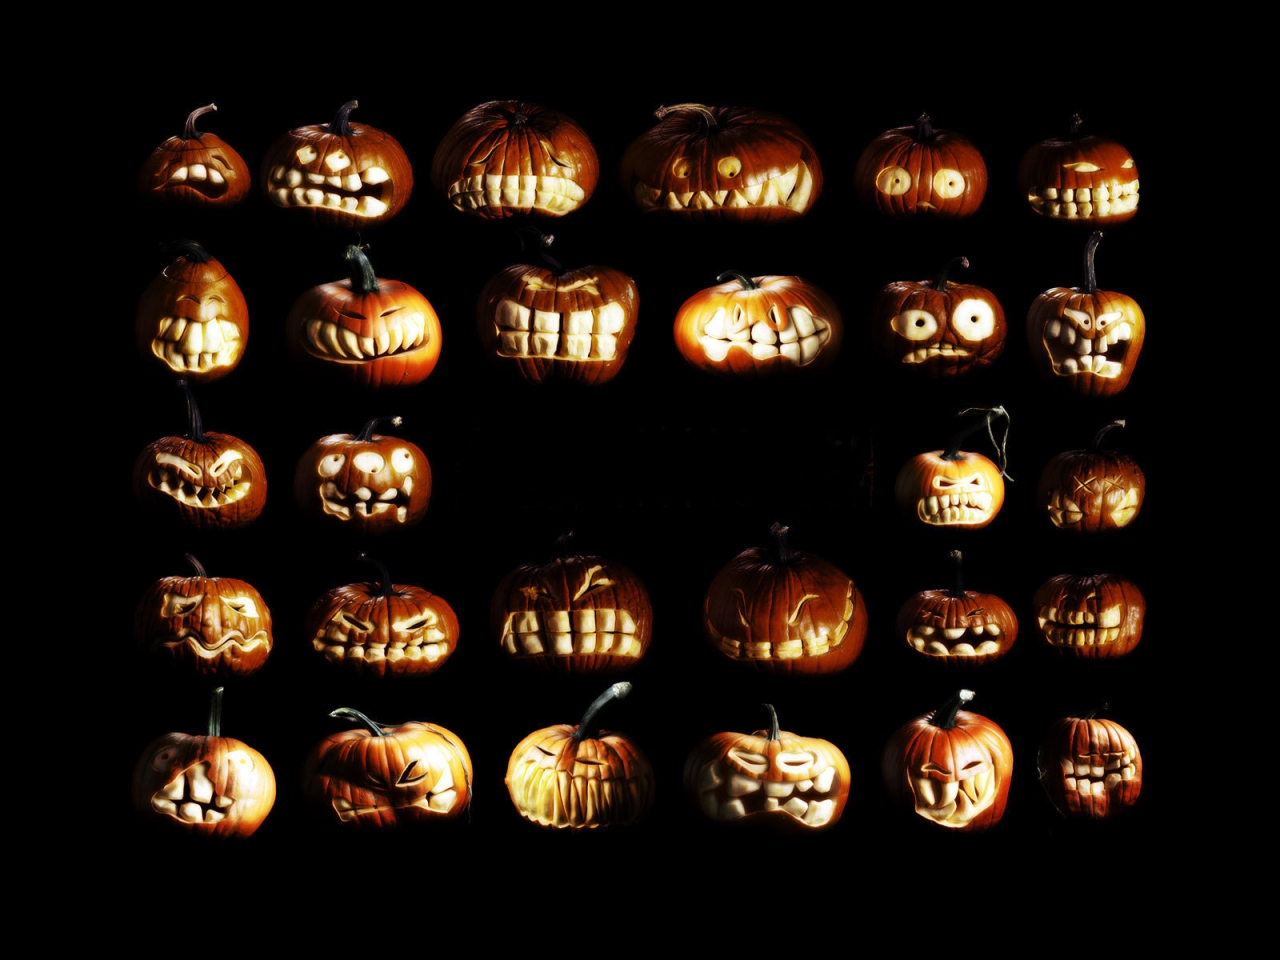 Pumpkin figures for Halloween for 1280 x 960 resolution